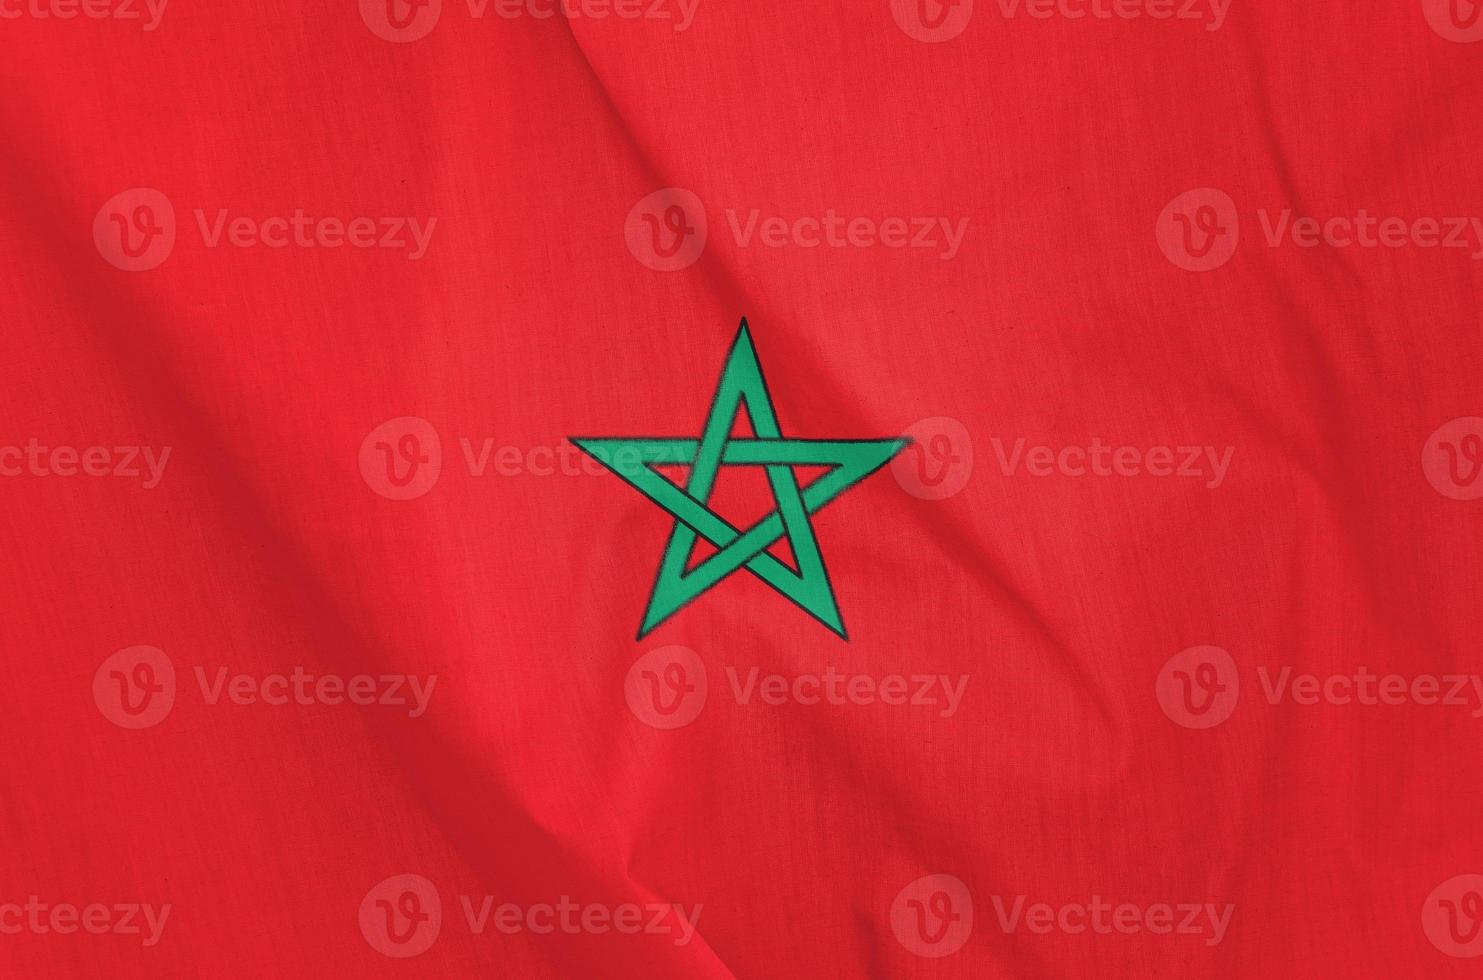 Marockos tygflagga foto